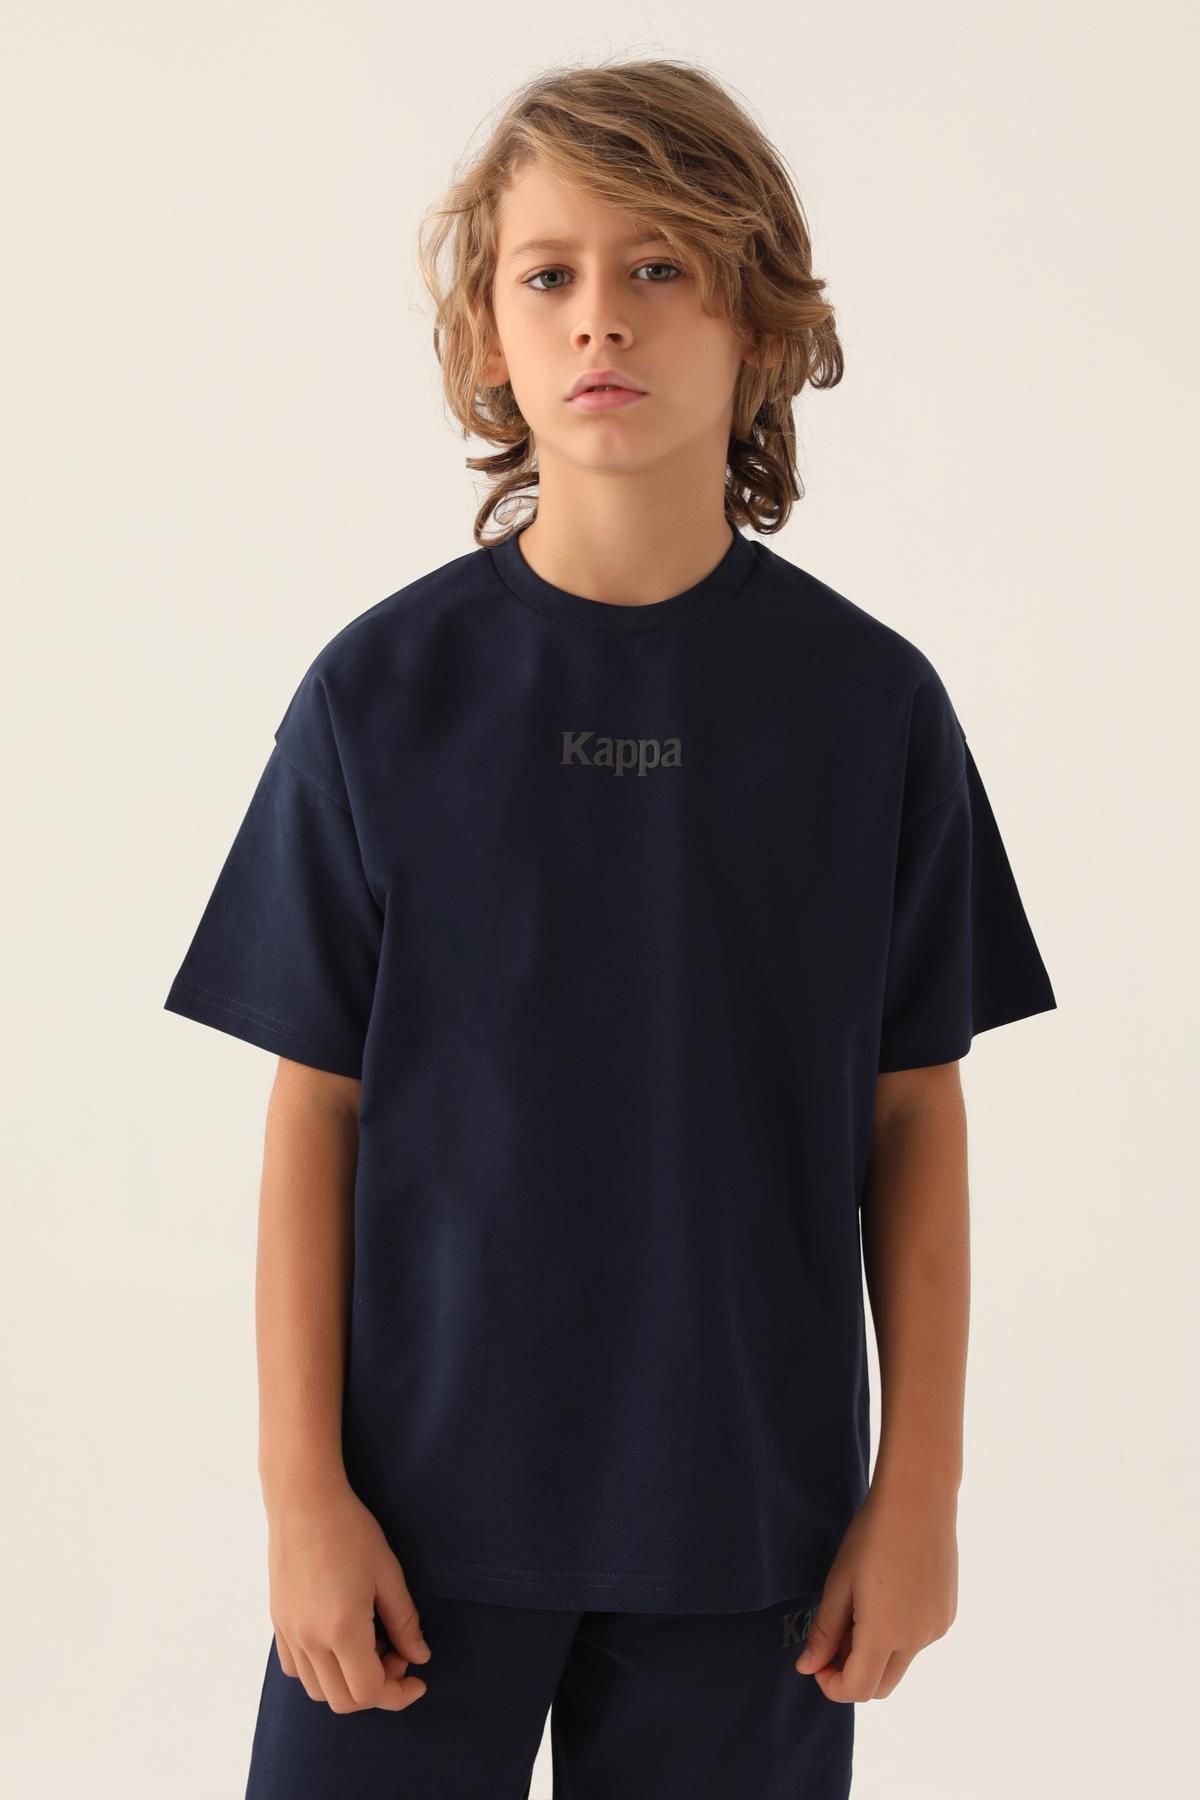 Kappa Authentic Caleb Erkek Çocuk Lacivert Regular Fit Tişört